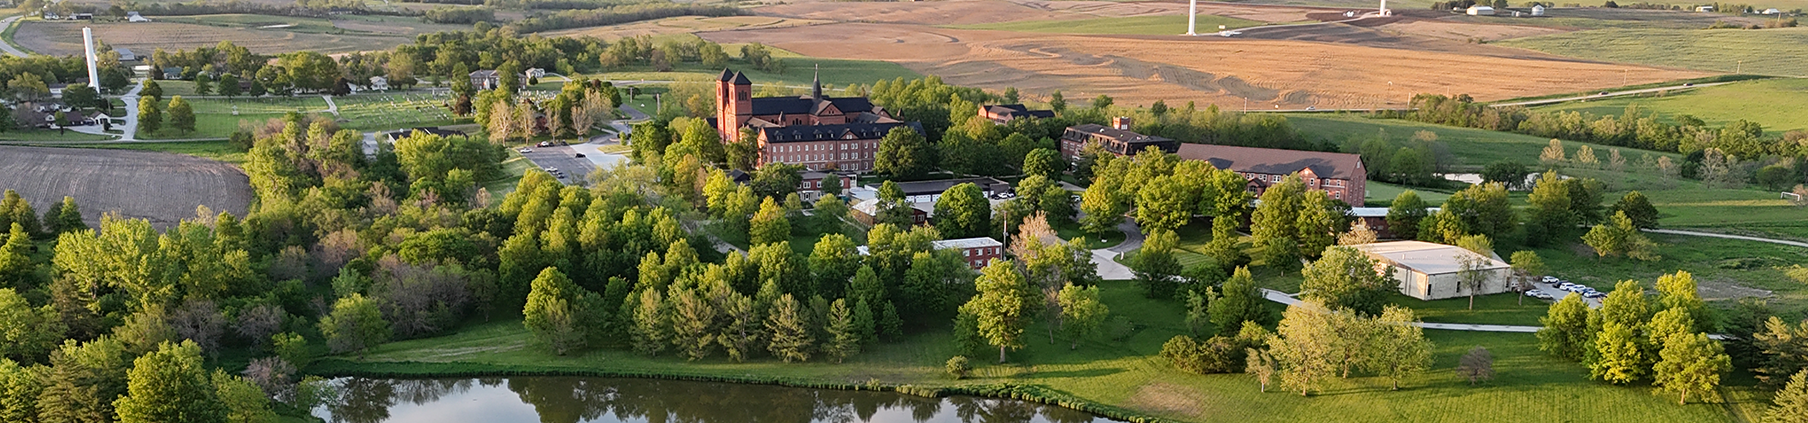 Monastery-ariel